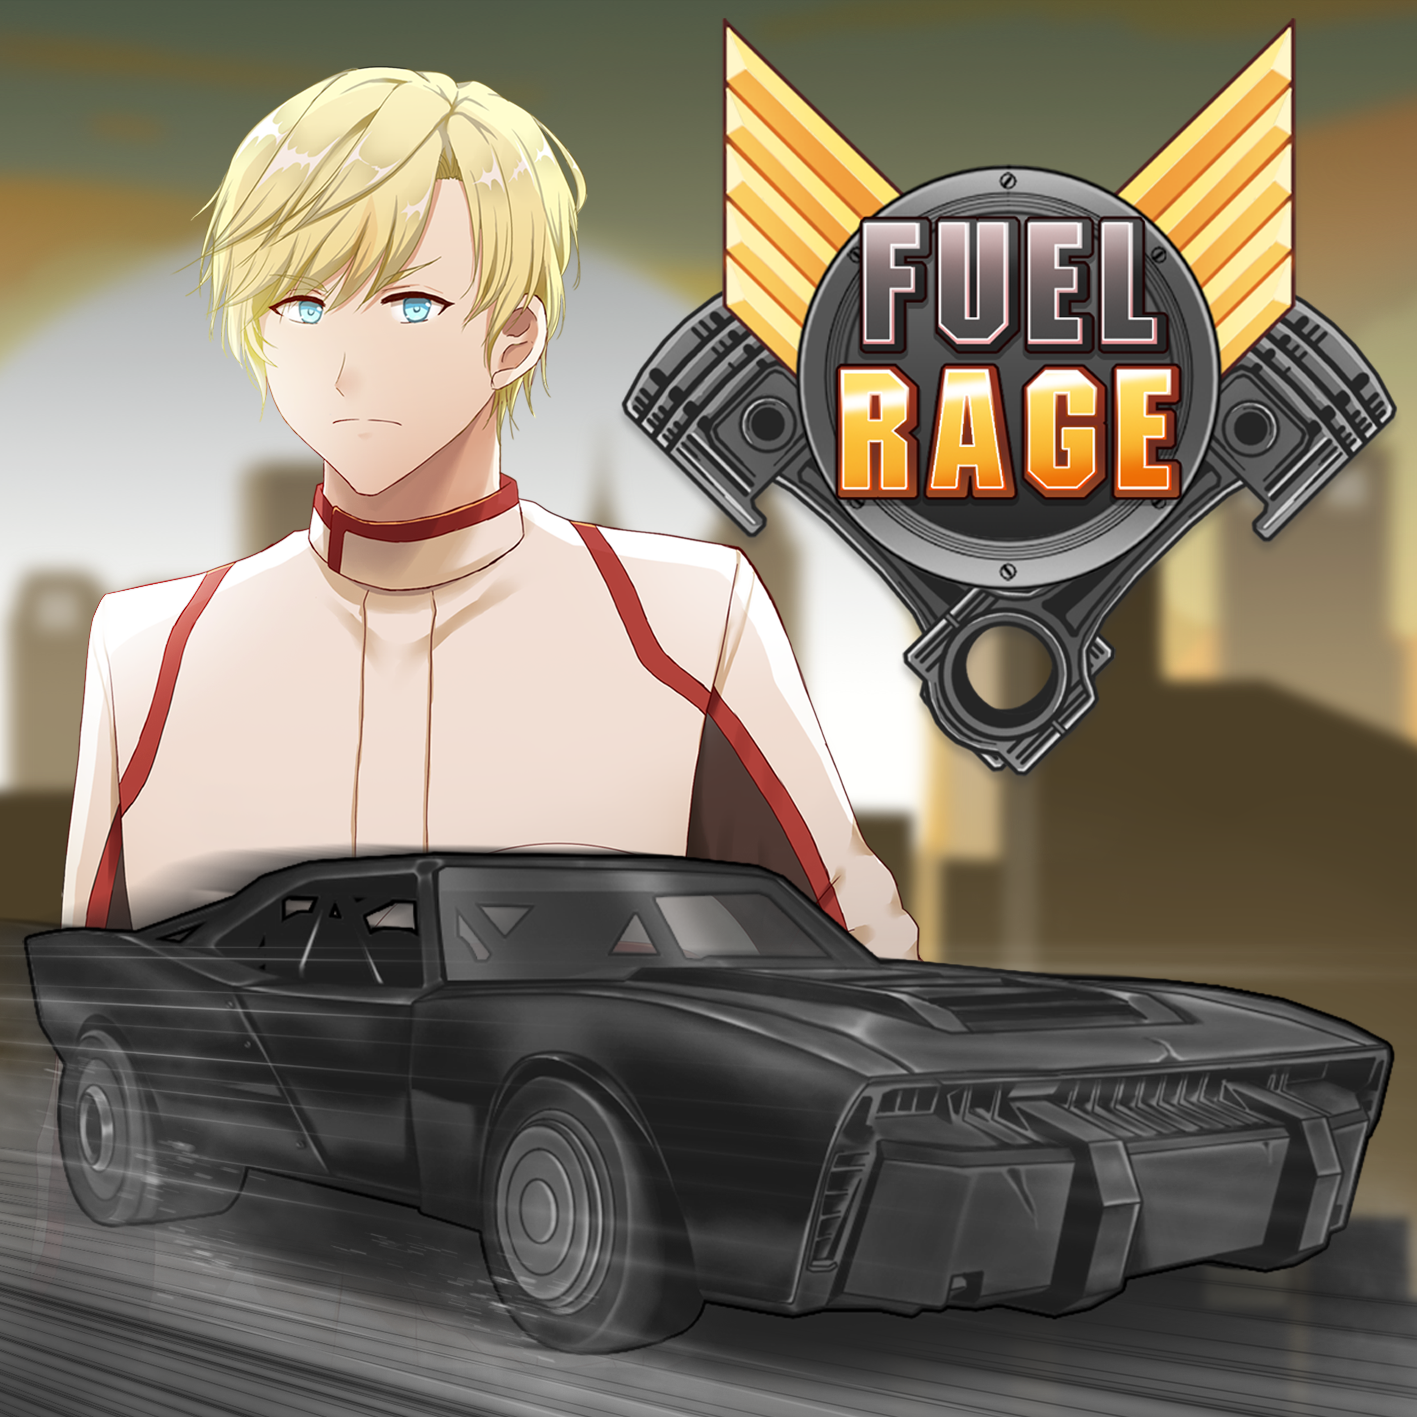 Fuel Race